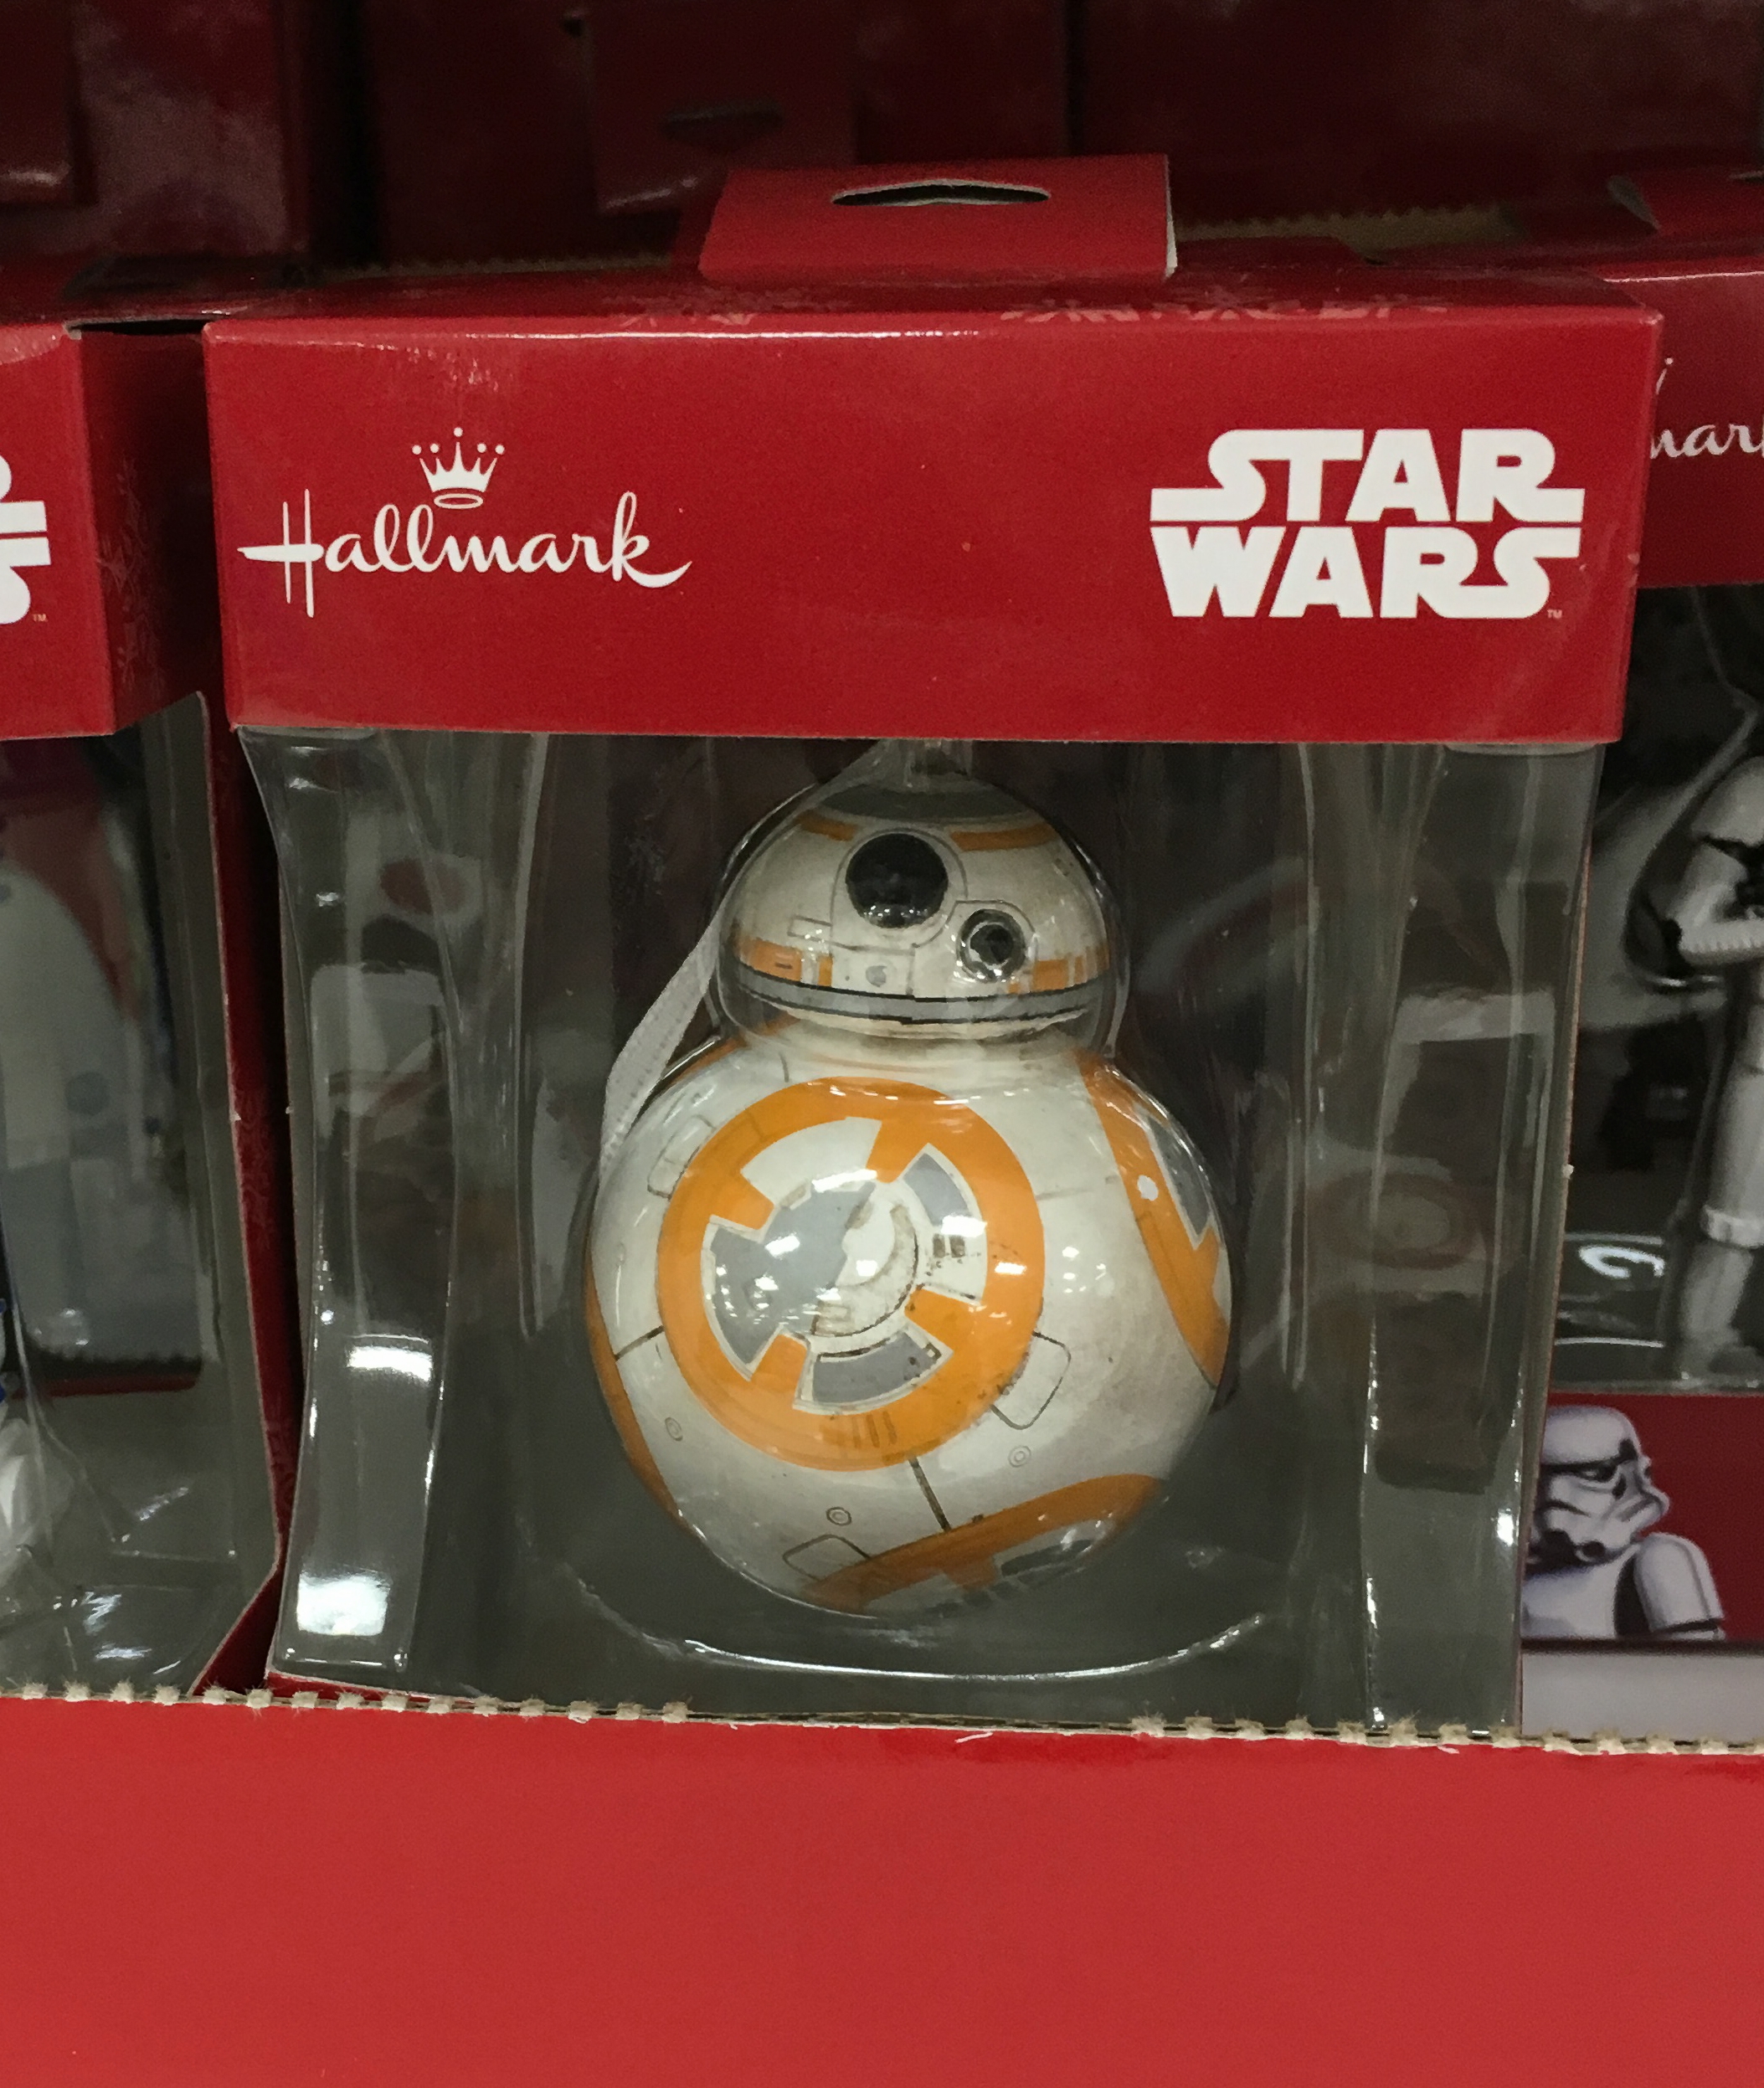 Hallmark-Retail-Star-Wars-Ornaments-2016-009.jpg